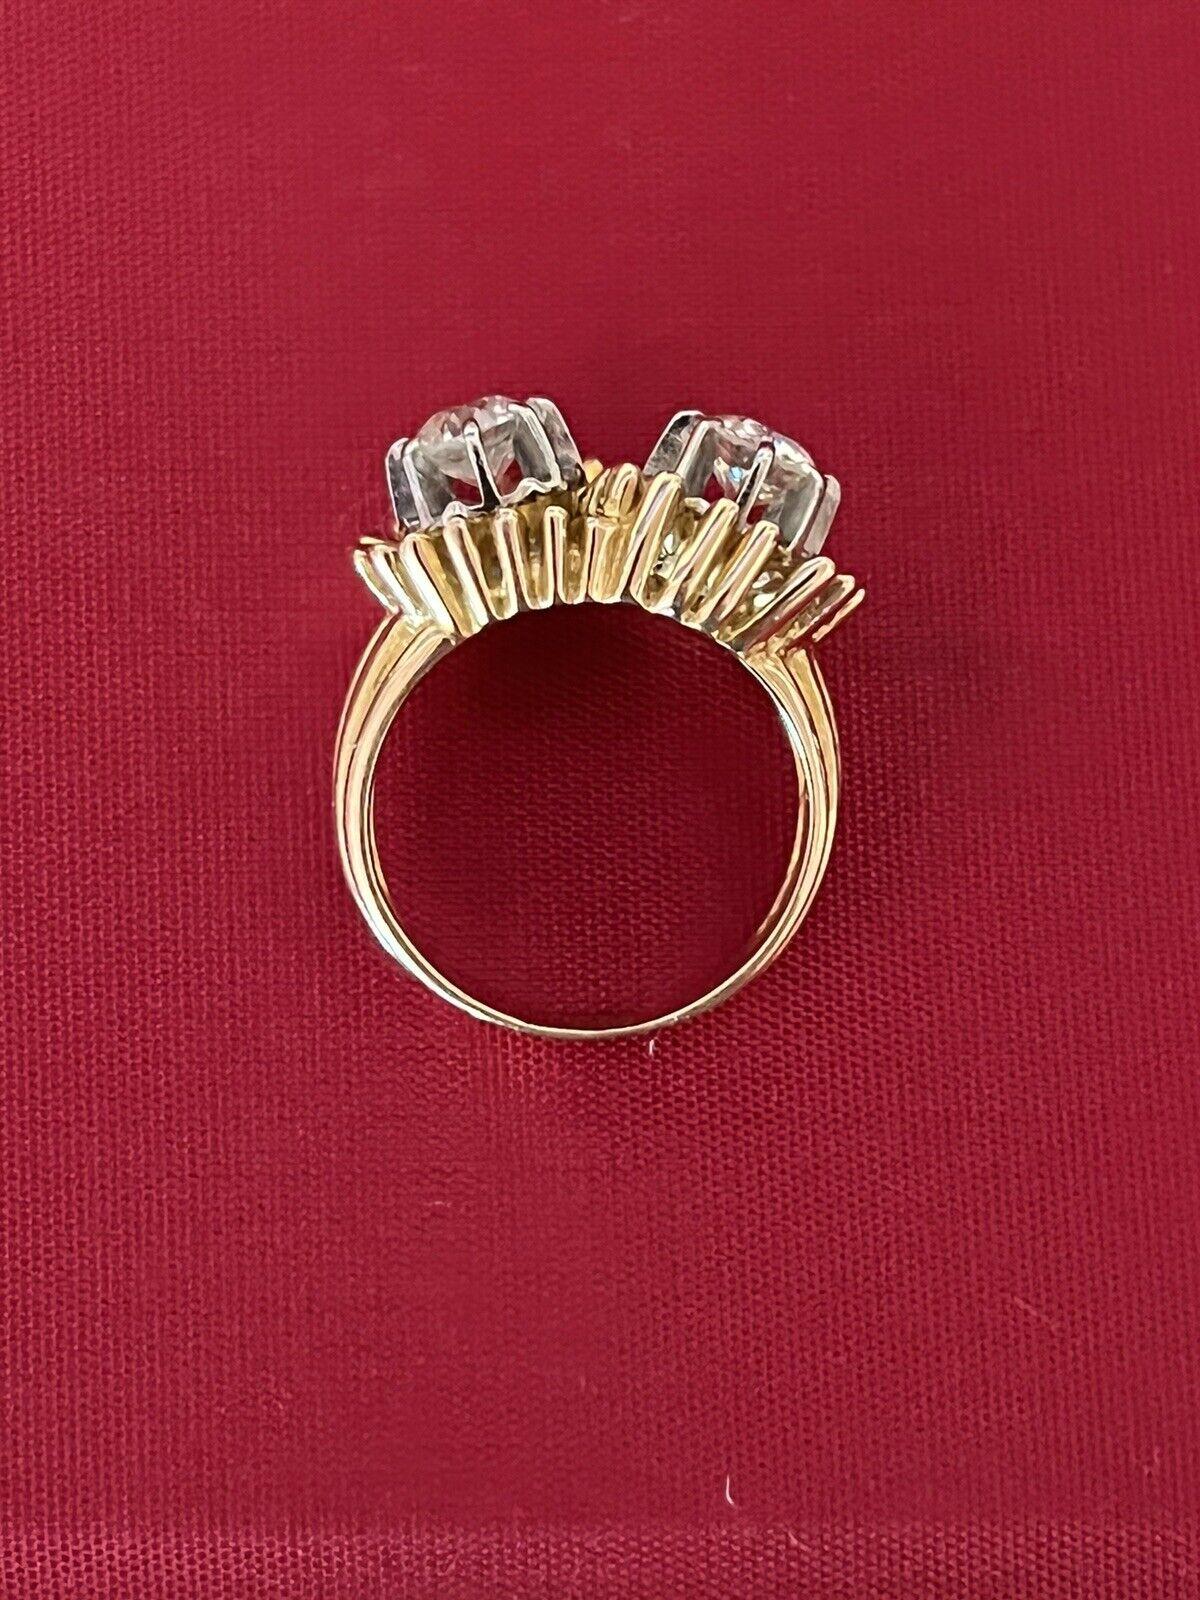 Round Cut French, 18k Yellow Gold, Platinum & Two Stone Diamond Ring Circa 1940s Retro